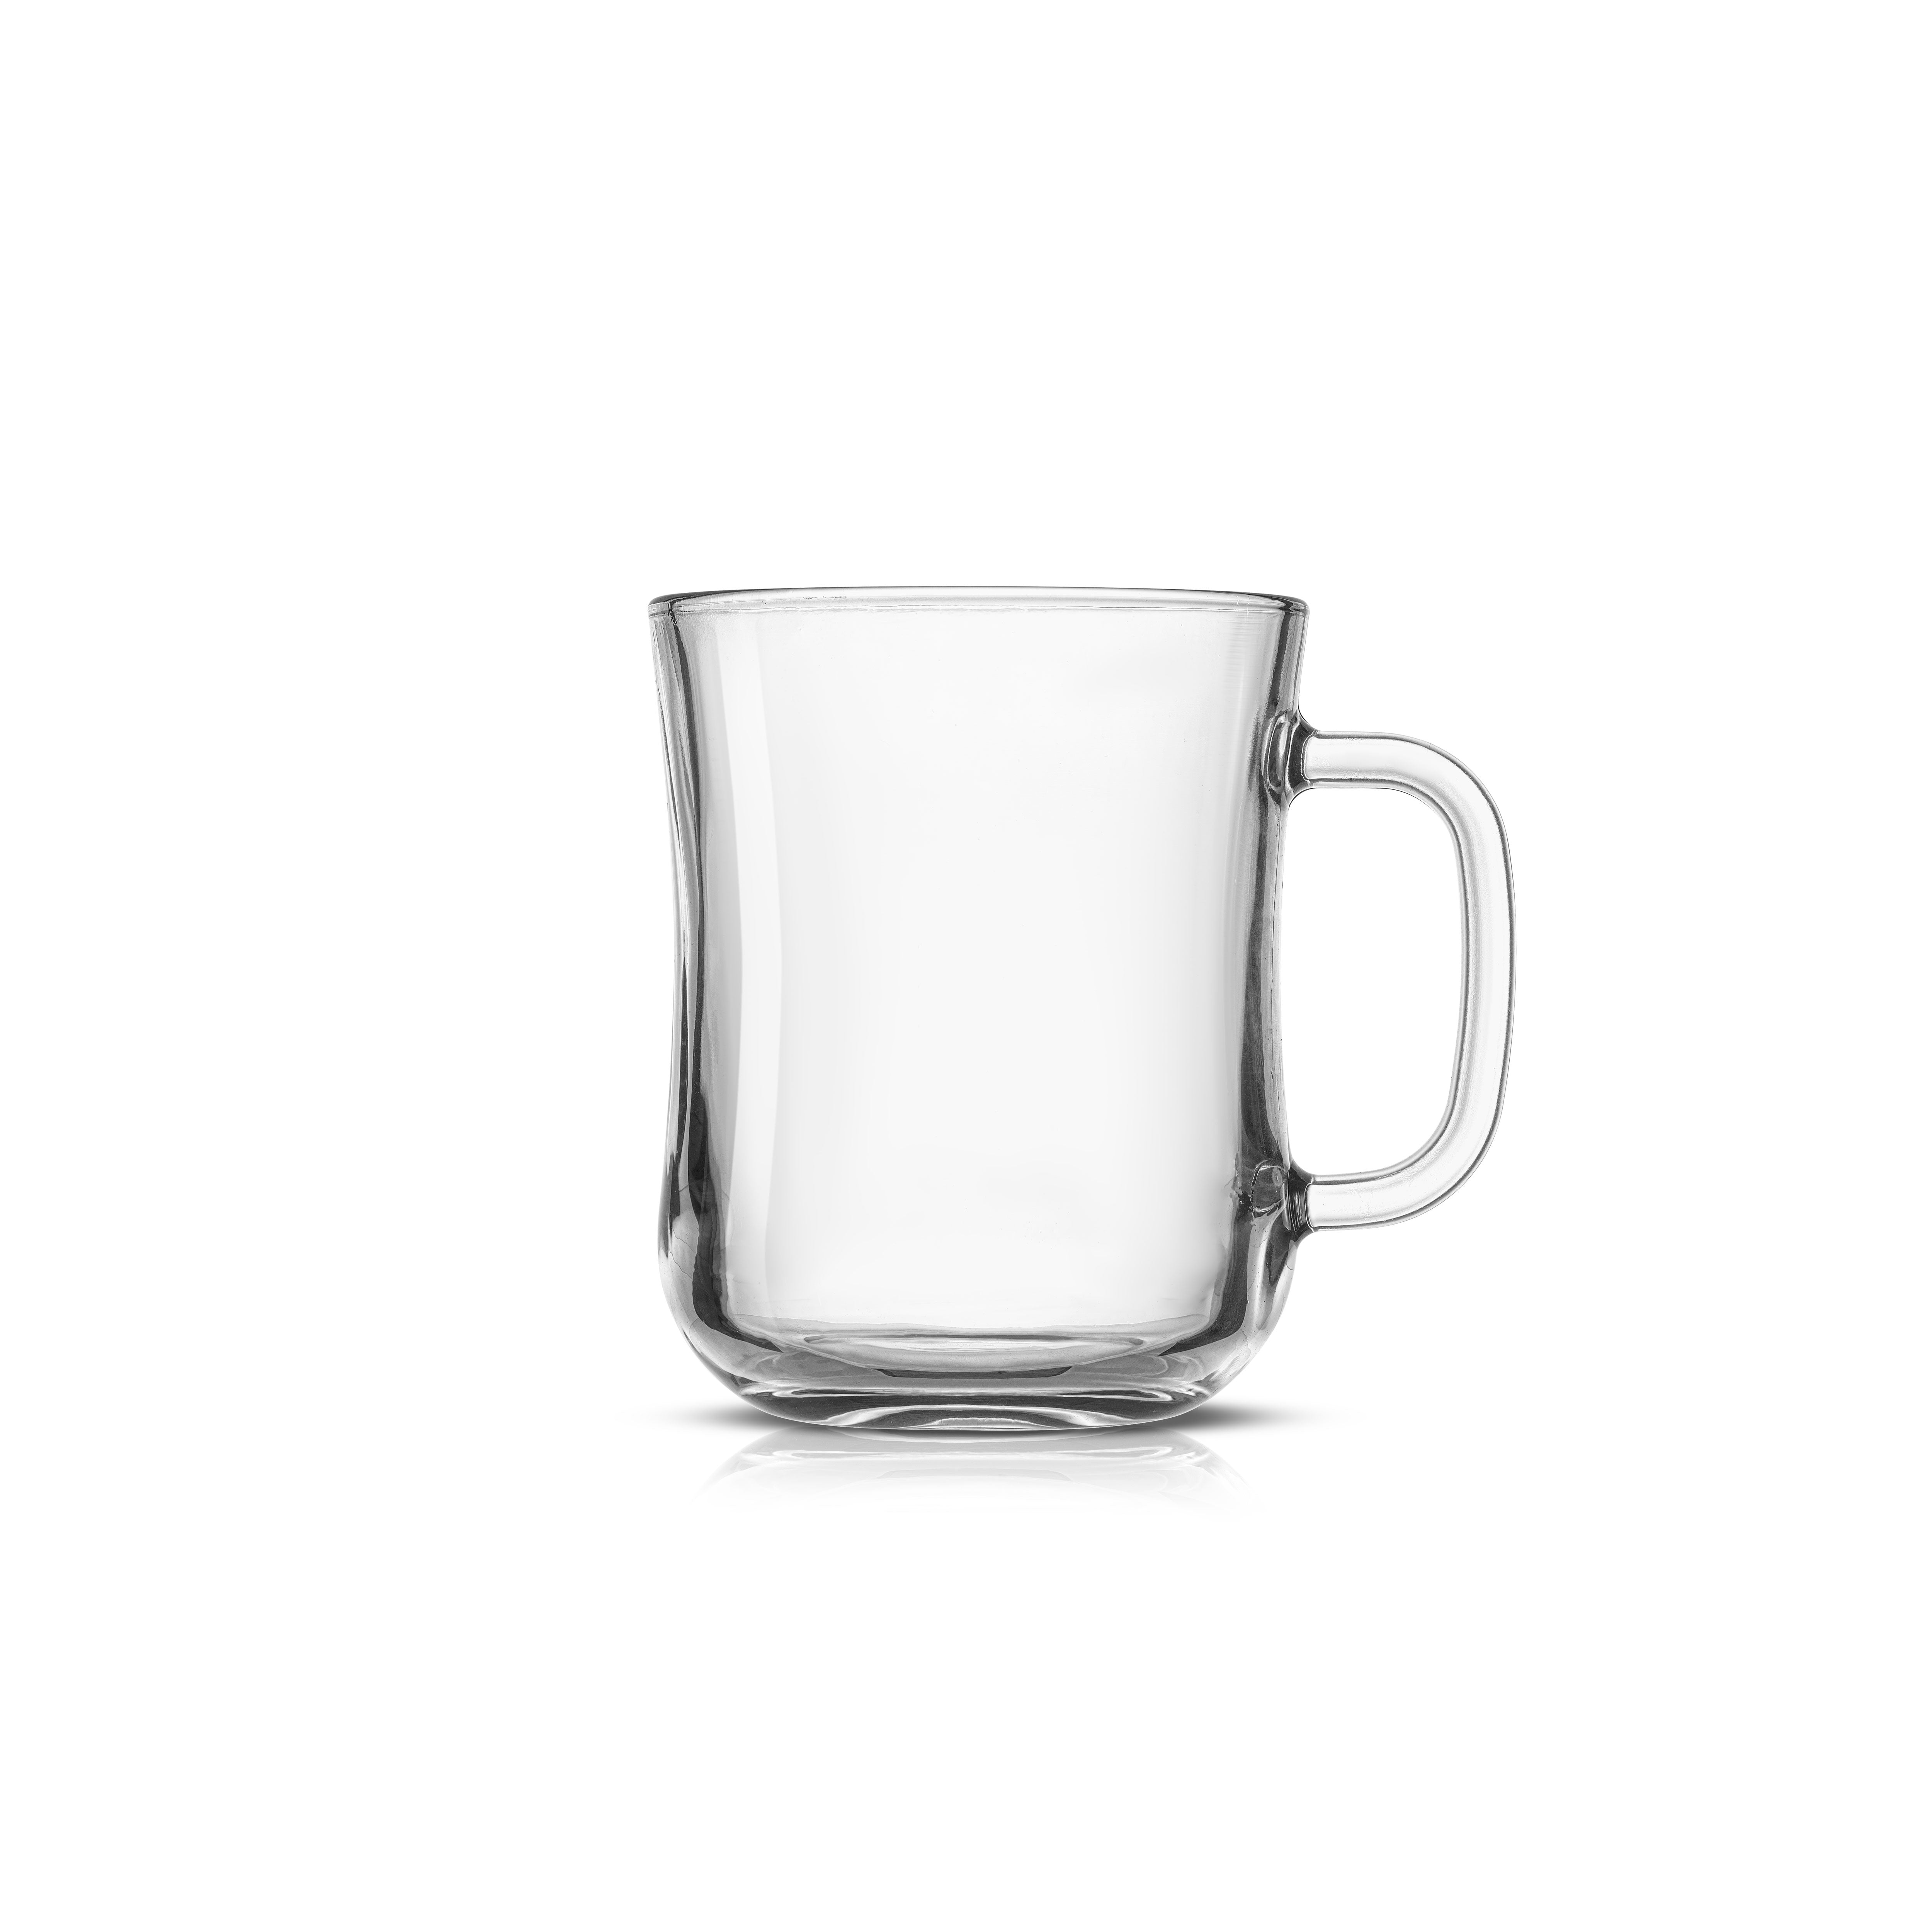 Diner Glass Coffee Mugs - Set of 4